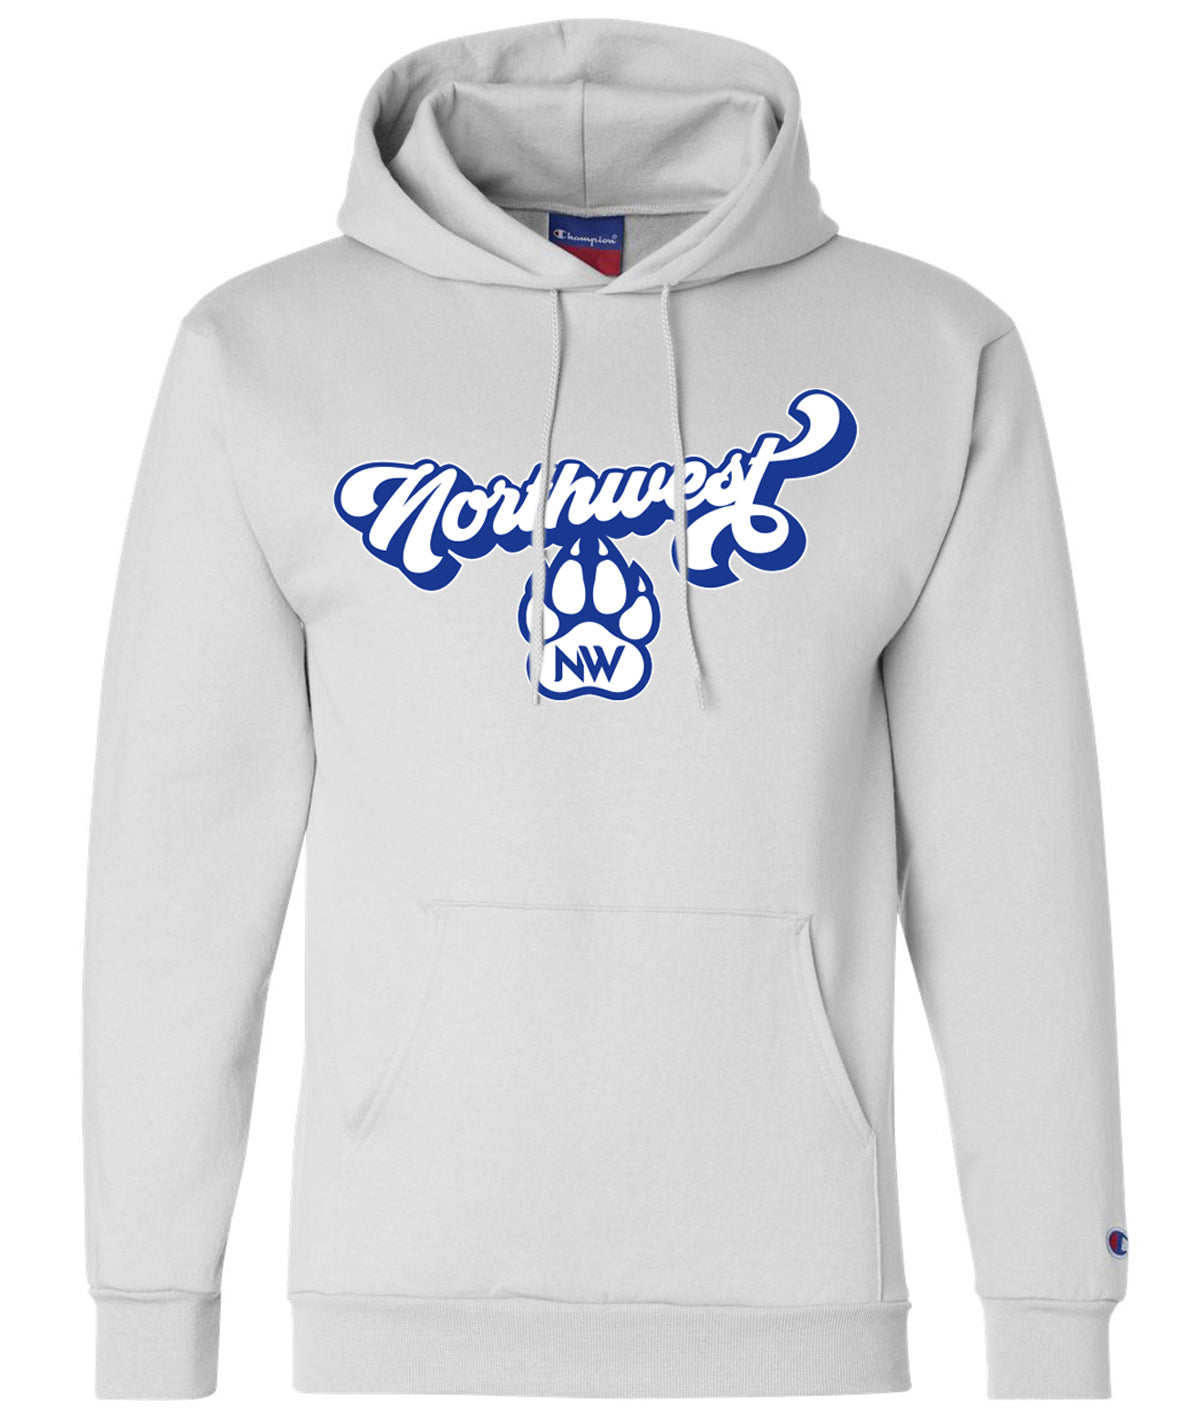 Wolves Customizable Champion Hooded Letterman – Northwest Locker Sweatshirt